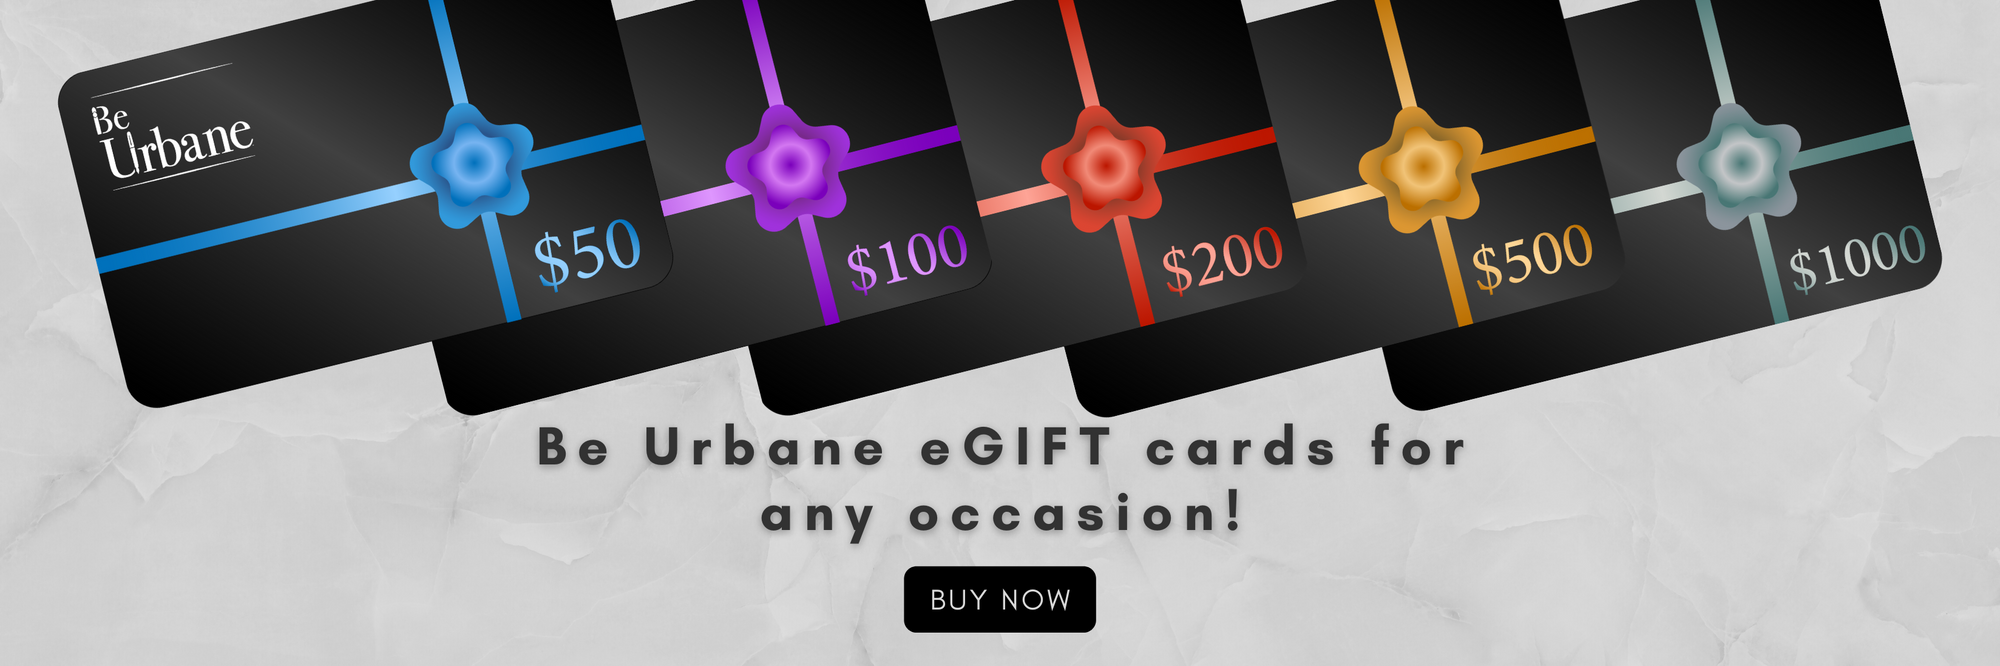 Be Urbane eGift Card